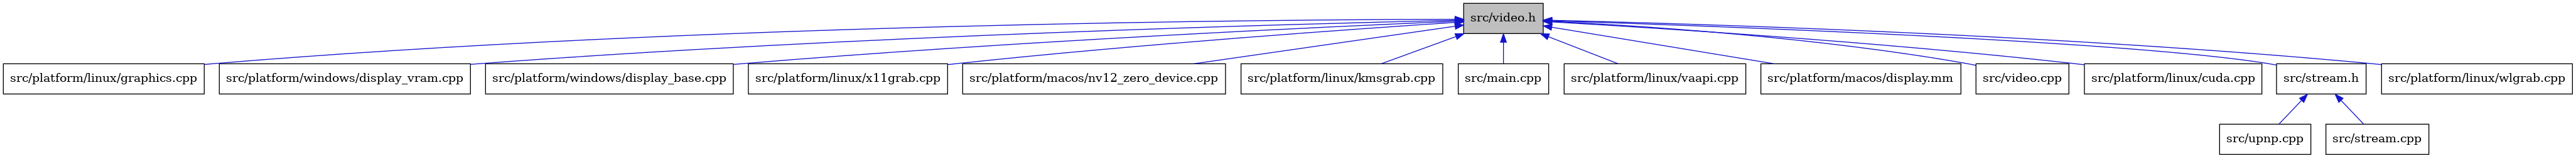 digraph {
    graph [bgcolor="#00000000"]
    node [shape=rectangle style=filled fillcolor="#FFFFFF" font=Helvetica padding=2]
    edge [color="#1414CE"]
    "15" [label="src/upnp.cpp" tooltip="src/upnp.cpp"]
    "14" [label="src/stream.cpp" tooltip="src/stream.cpp"]
    "3" [label="src/platform/linux/graphics.cpp" tooltip="src/platform/linux/graphics.cpp"]
    "12" [label="src/platform/windows/display_vram.cpp" tooltip="src/platform/windows/display_vram.cpp"]
    "11" [label="src/platform/windows/display_base.cpp" tooltip="src/platform/windows/display_base.cpp"]
    "8" [label="src/platform/linux/x11grab.cpp" tooltip="src/platform/linux/x11grab.cpp"]
    "10" [label="src/platform/macos/nv12_zero_device.cpp" tooltip="src/platform/macos/nv12_zero_device.cpp"]
    "5" [label="src/platform/linux/kmsgrab.cpp" tooltip="src/platform/linux/kmsgrab.cpp"]
    "2" [label="src/main.cpp" tooltip="src/main.cpp"]
    "6" [label="src/platform/linux/vaapi.cpp" tooltip="src/platform/linux/vaapi.cpp"]
    "9" [label="src/platform/macos/display.mm" tooltip="src/platform/macos/display.mm"]
    "16" [label="src/video.cpp" tooltip="src/video.cpp"]
    "4" [label="src/platform/linux/cuda.cpp" tooltip="src/platform/linux/cuda.cpp"]
    "13" [label="src/stream.h" tooltip="src/stream.h"]
    "7" [label="src/platform/linux/wlgrab.cpp" tooltip="src/platform/linux/wlgrab.cpp"]
    "1" [label="src/video.h" tooltip="src/video.h" fillcolor="#BFBFBF"]
    "13" -> "14" [dir=back tooltip="include"]
    "13" -> "15" [dir=back tooltip="include"]
    "1" -> "2" [dir=back tooltip="include"]
    "1" -> "3" [dir=back tooltip="include"]
    "1" -> "4" [dir=back tooltip="include"]
    "1" -> "5" [dir=back tooltip="include"]
    "1" -> "6" [dir=back tooltip="include"]
    "1" -> "7" [dir=back tooltip="include"]
    "1" -> "8" [dir=back tooltip="include"]
    "1" -> "9" [dir=back tooltip="include"]
    "1" -> "10" [dir=back tooltip="include"]
    "1" -> "11" [dir=back tooltip="include"]
    "1" -> "12" [dir=back tooltip="include"]
    "1" -> "13" [dir=back tooltip="include"]
    "1" -> "16" [dir=back tooltip="include"]
}